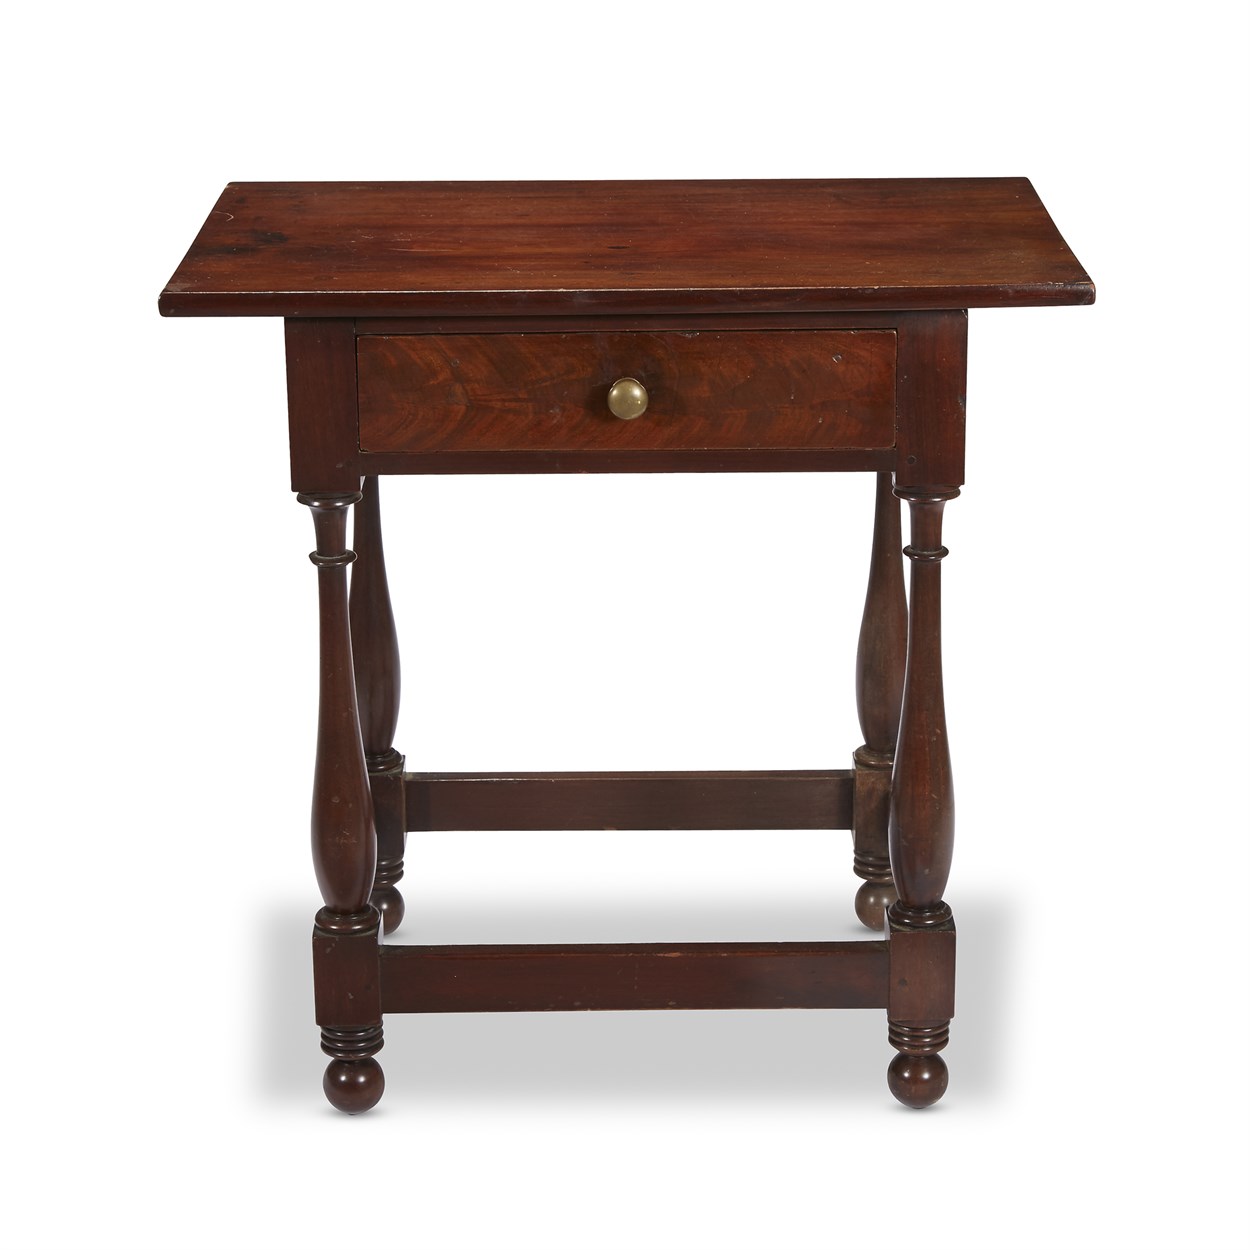 Lot 59 - One drawer walnut tavern table